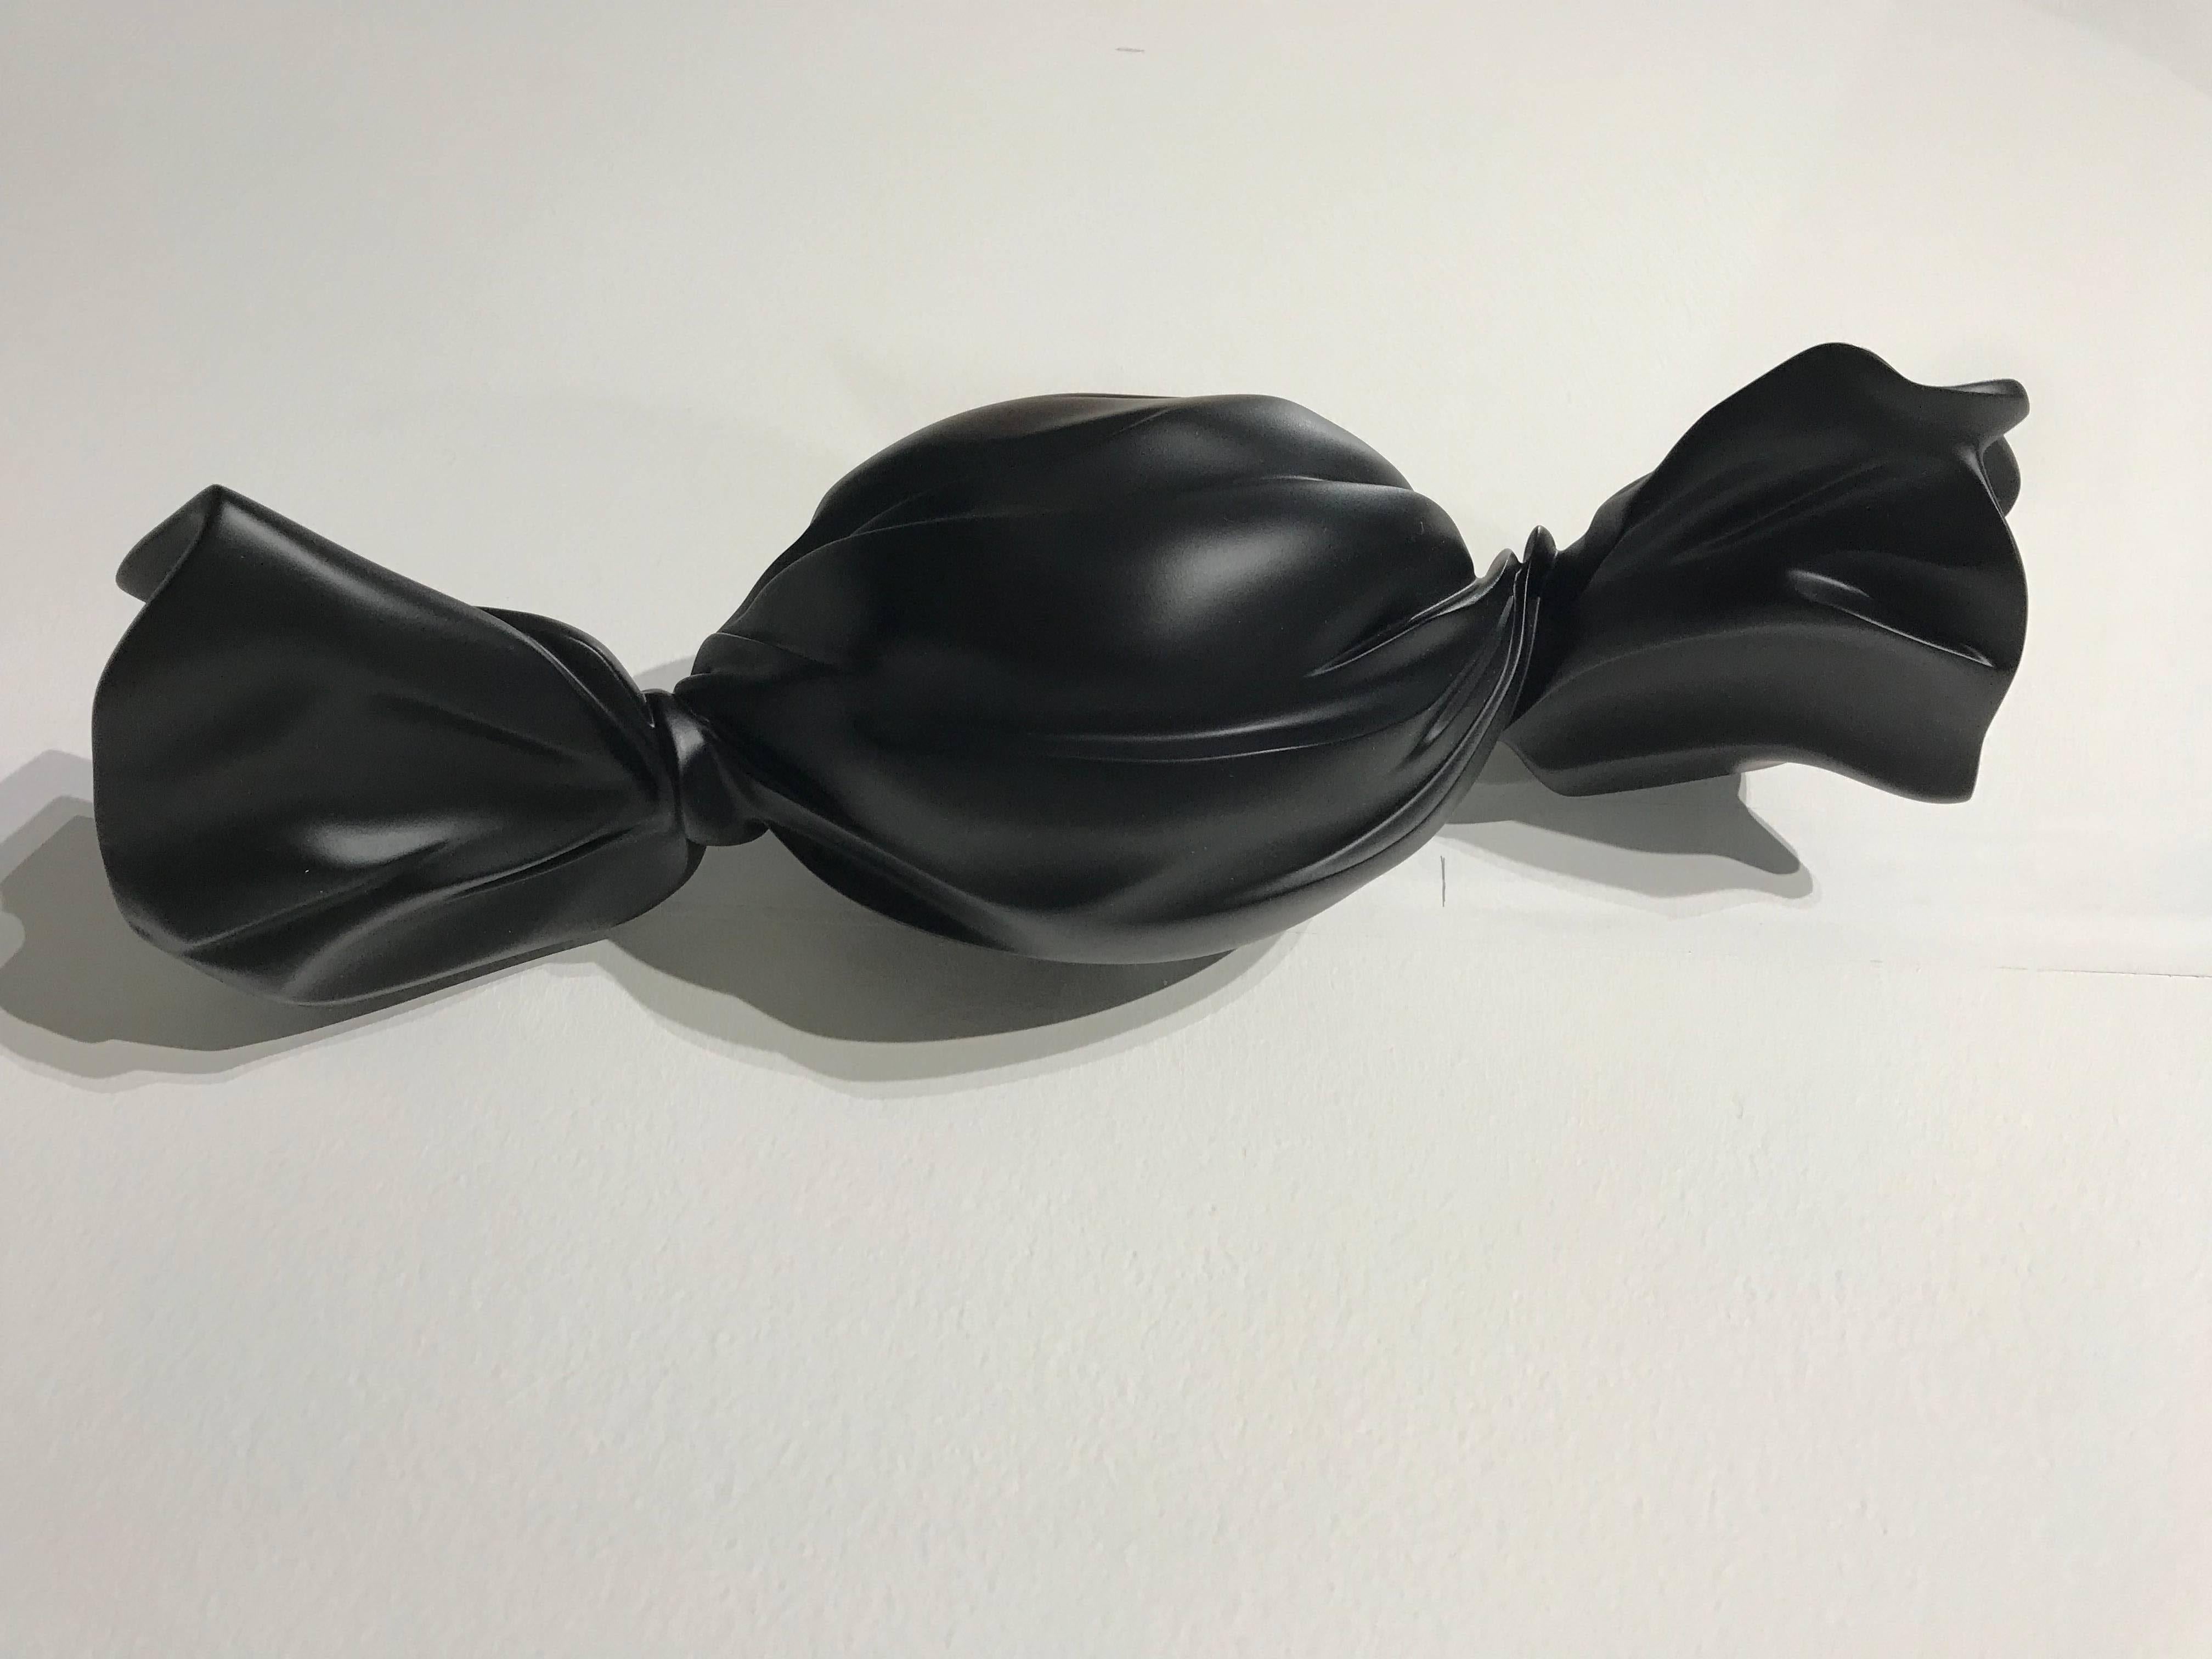 Candy - Black matte - Sculpture by Sandra Cannock